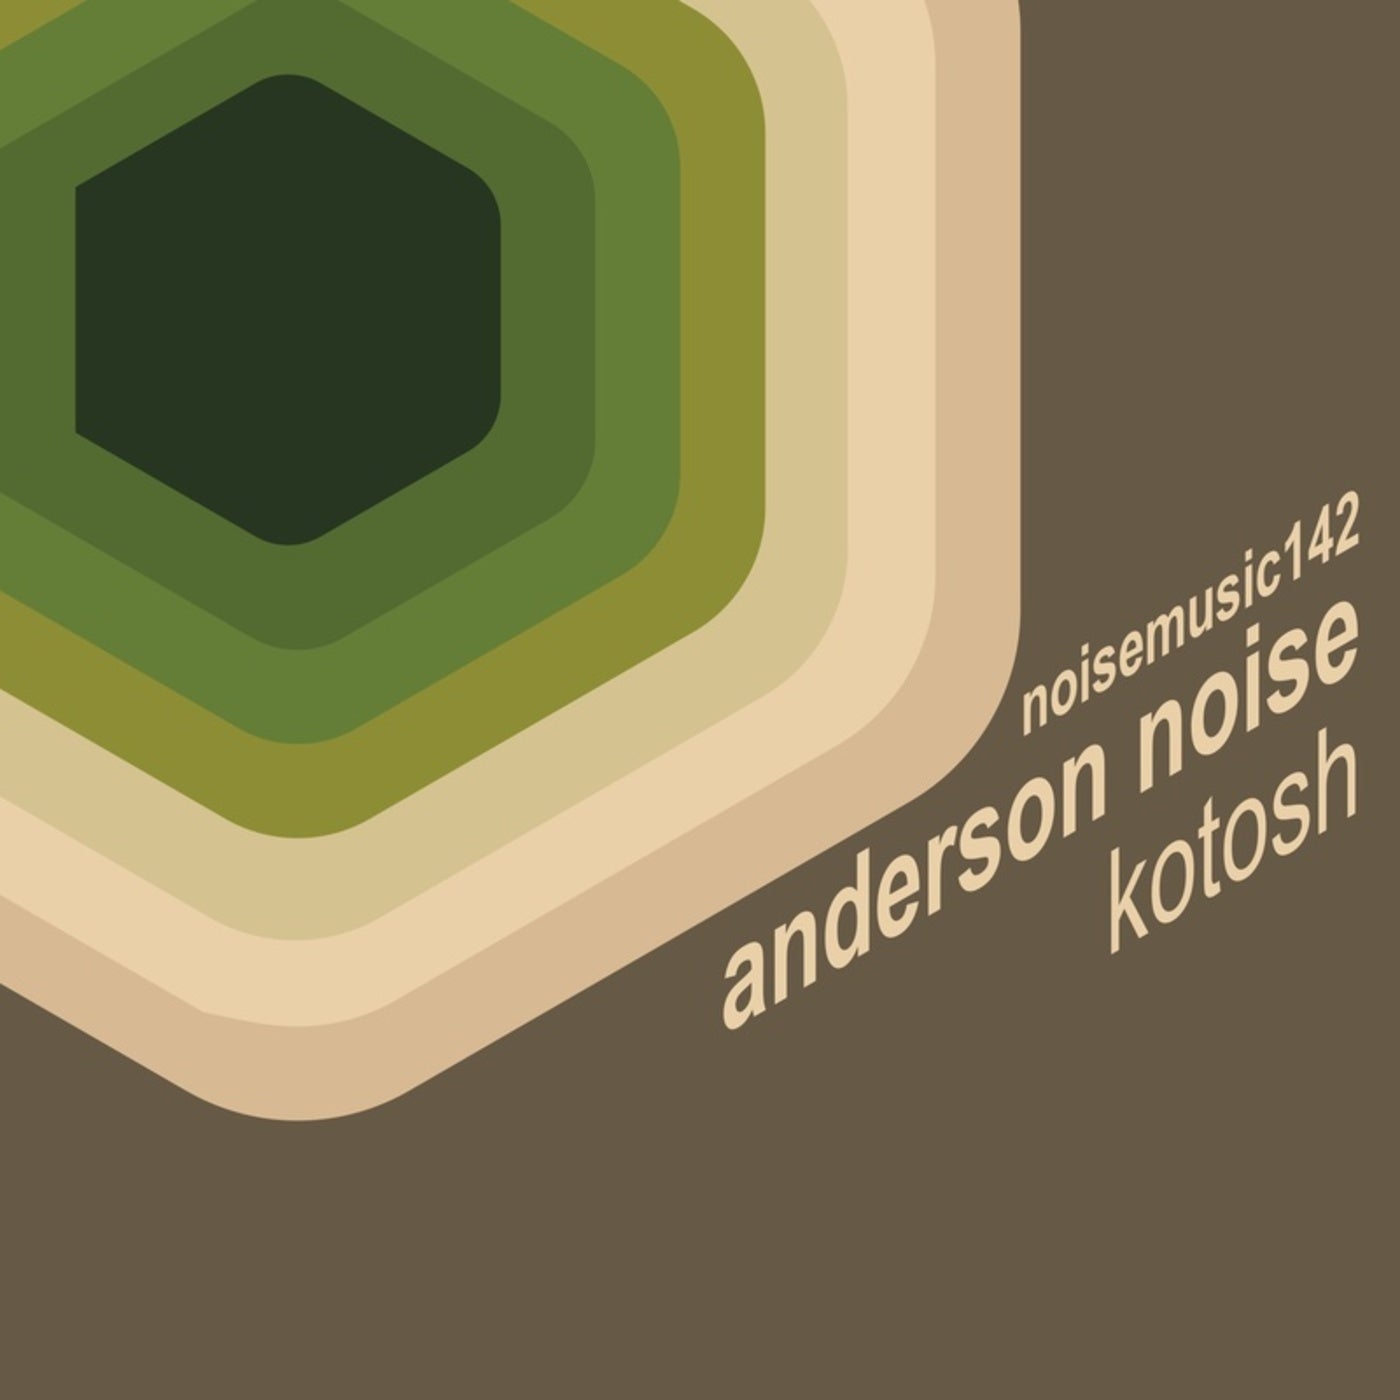 Cover - Anderson Noise - Kotosh (Original Mix)